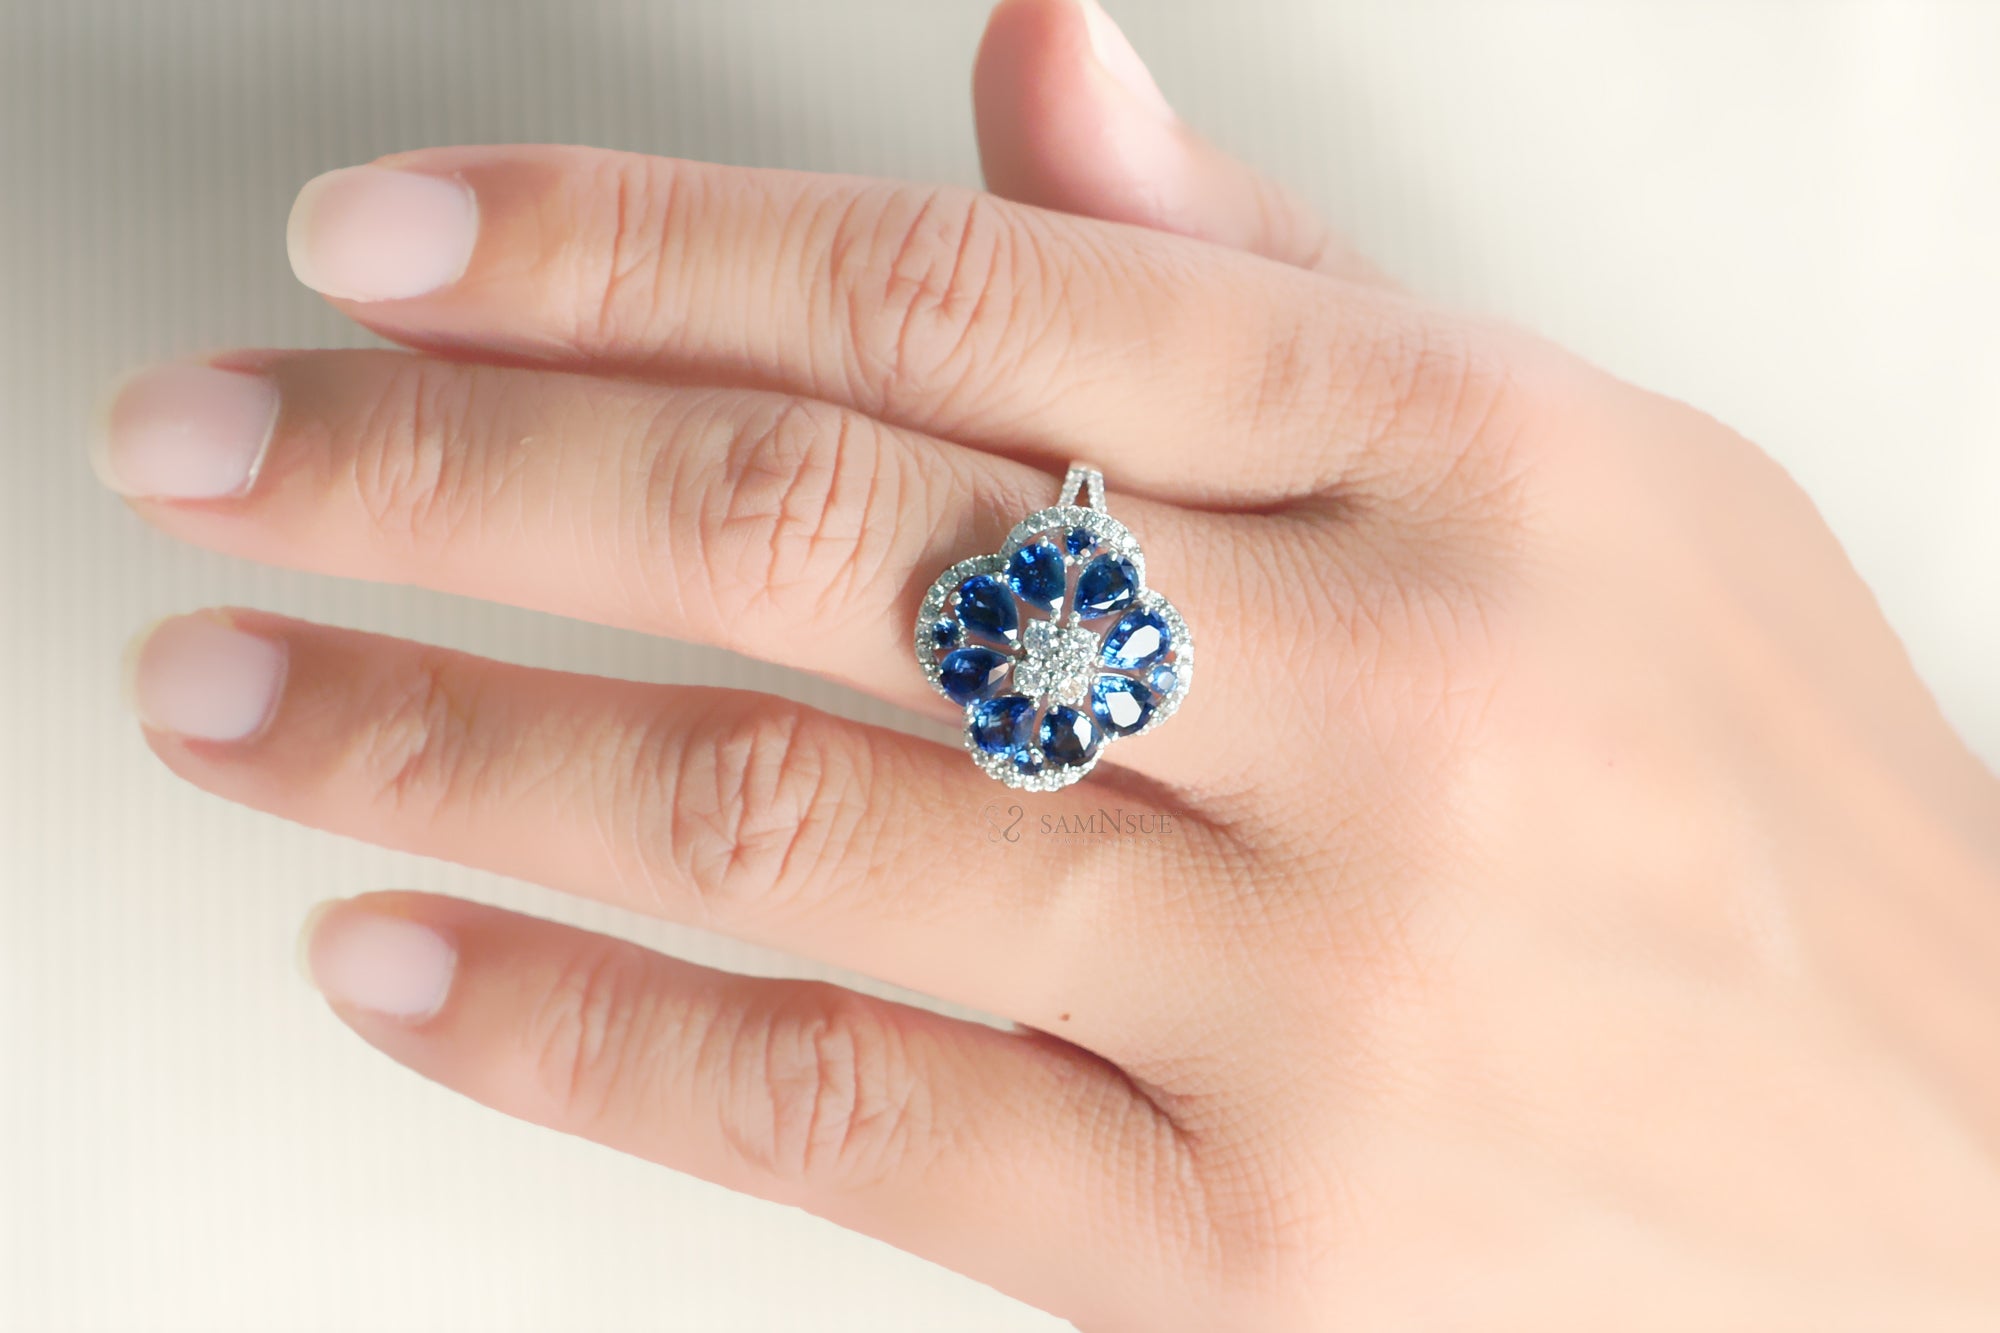 The Clarissa Blue Sapphire Ring (3.76 ct tw.)